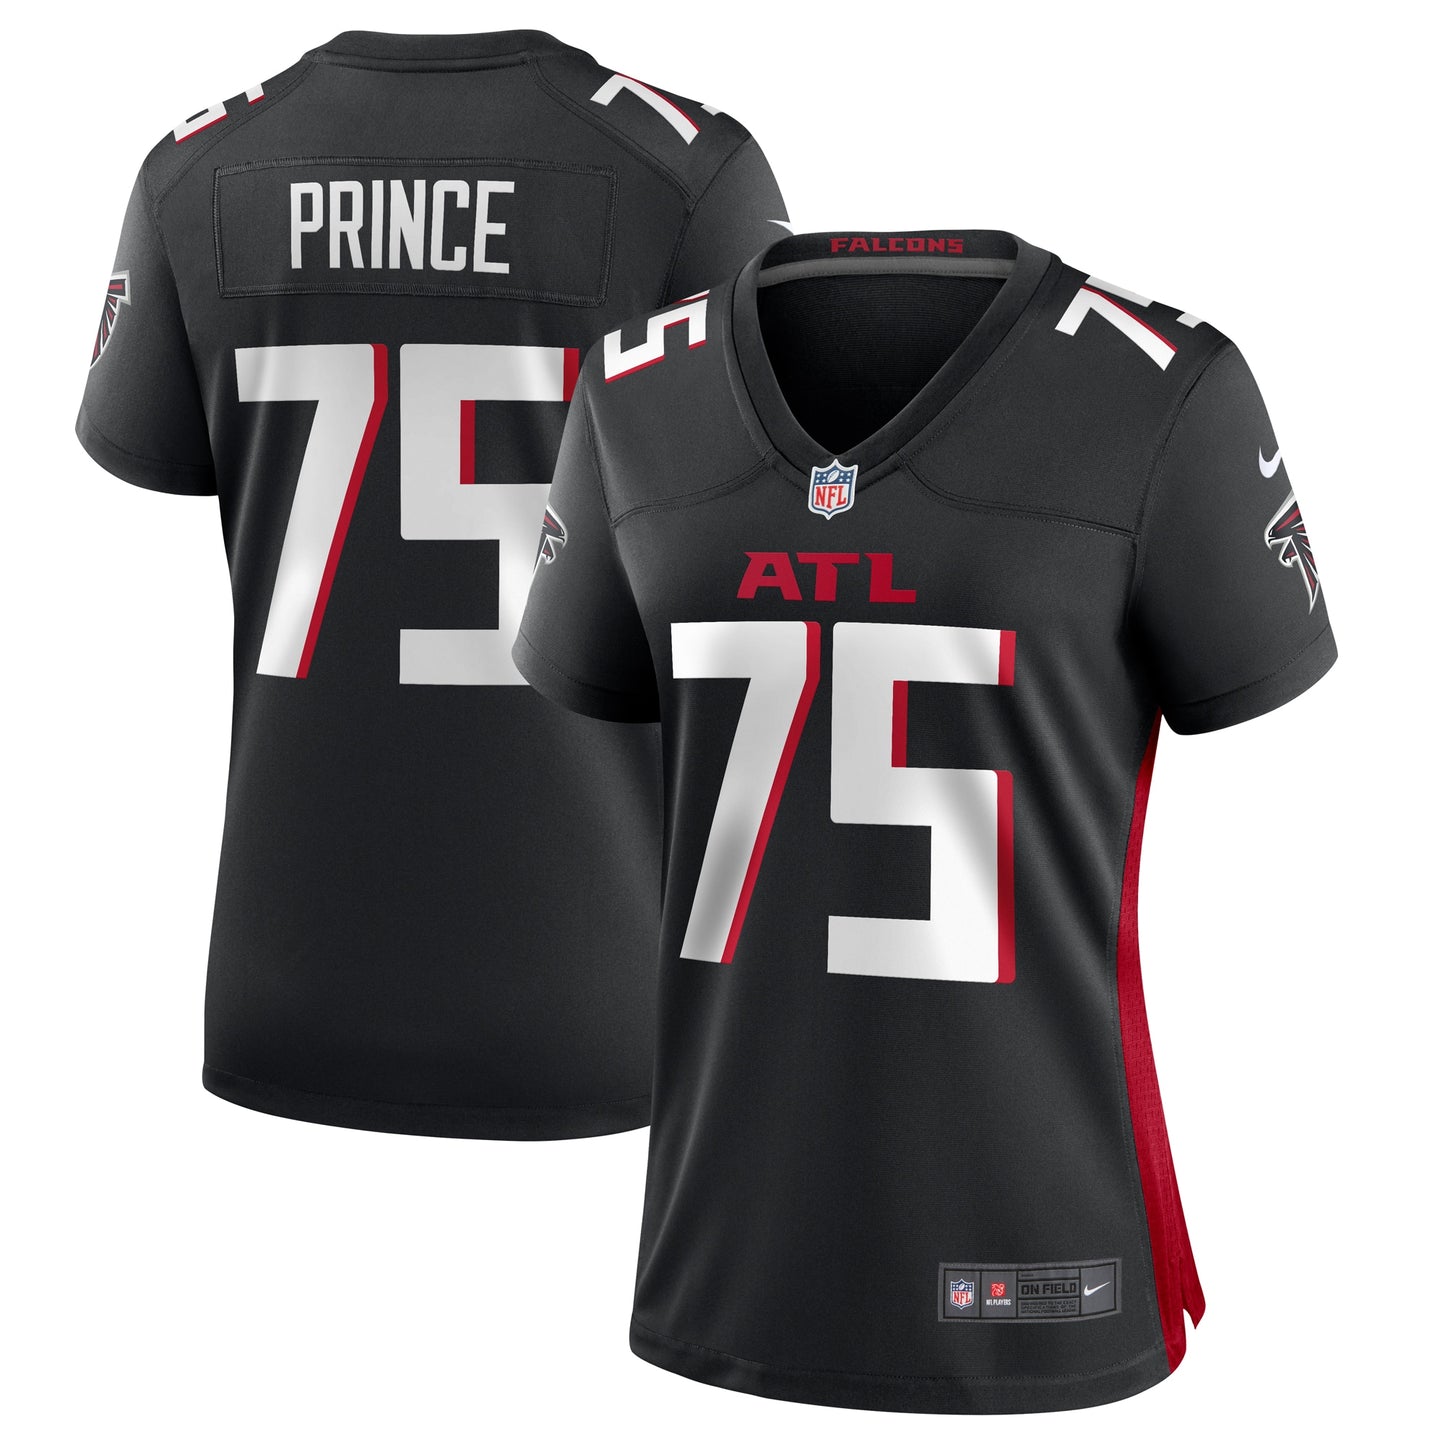 Isaiah Prince Atlanta Falcons Nike Women's Team Game Jersey - Black